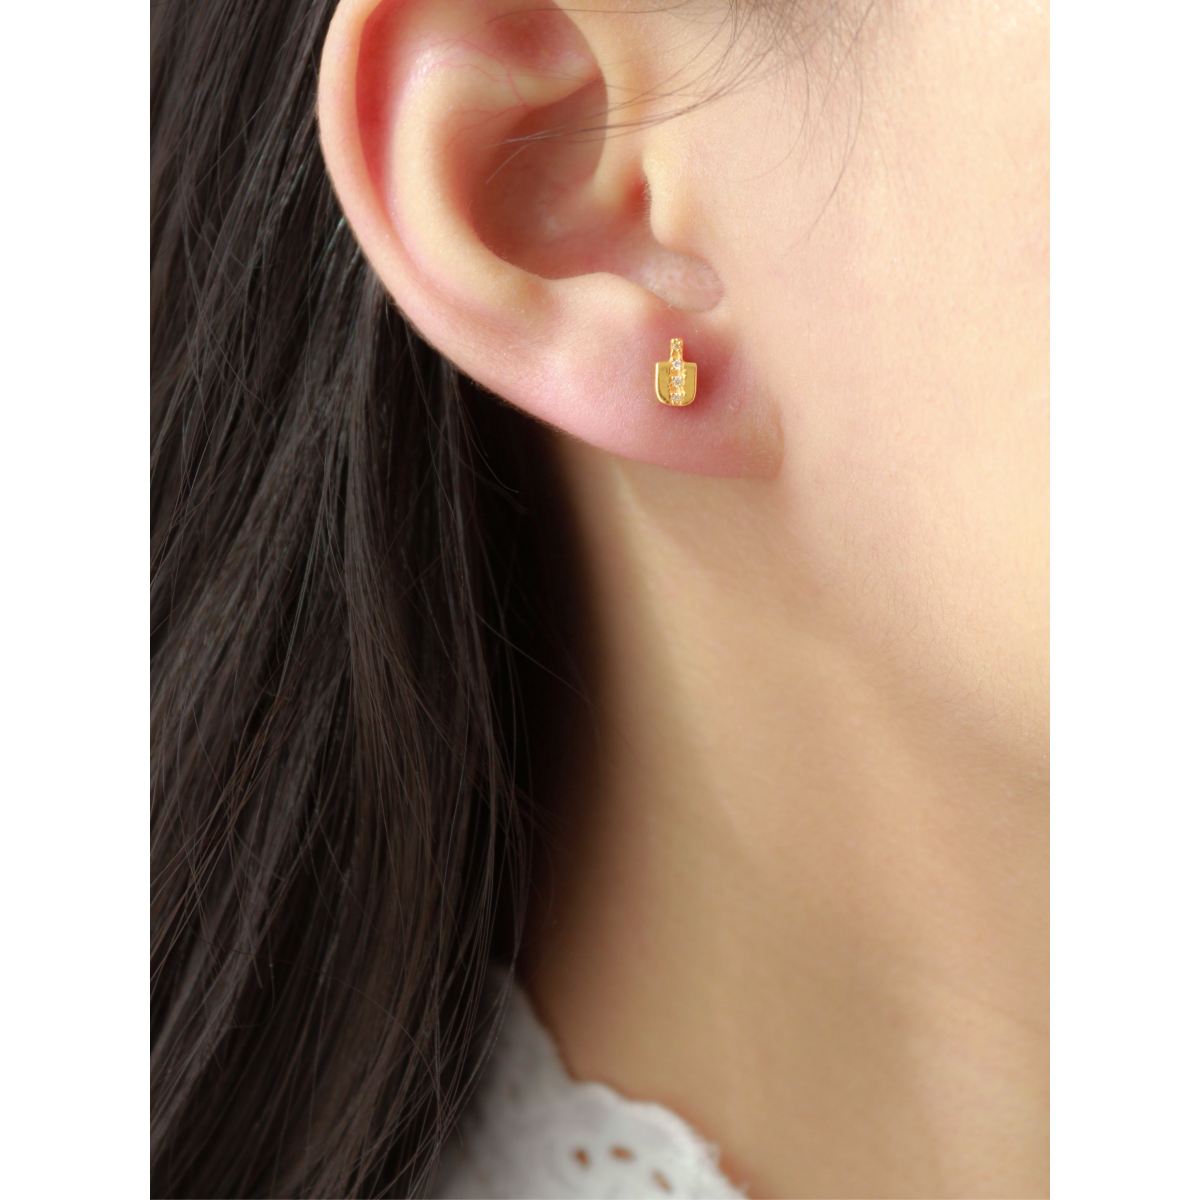 Small gold earrings designs for daily use - Priyankaroy08953 - Medium